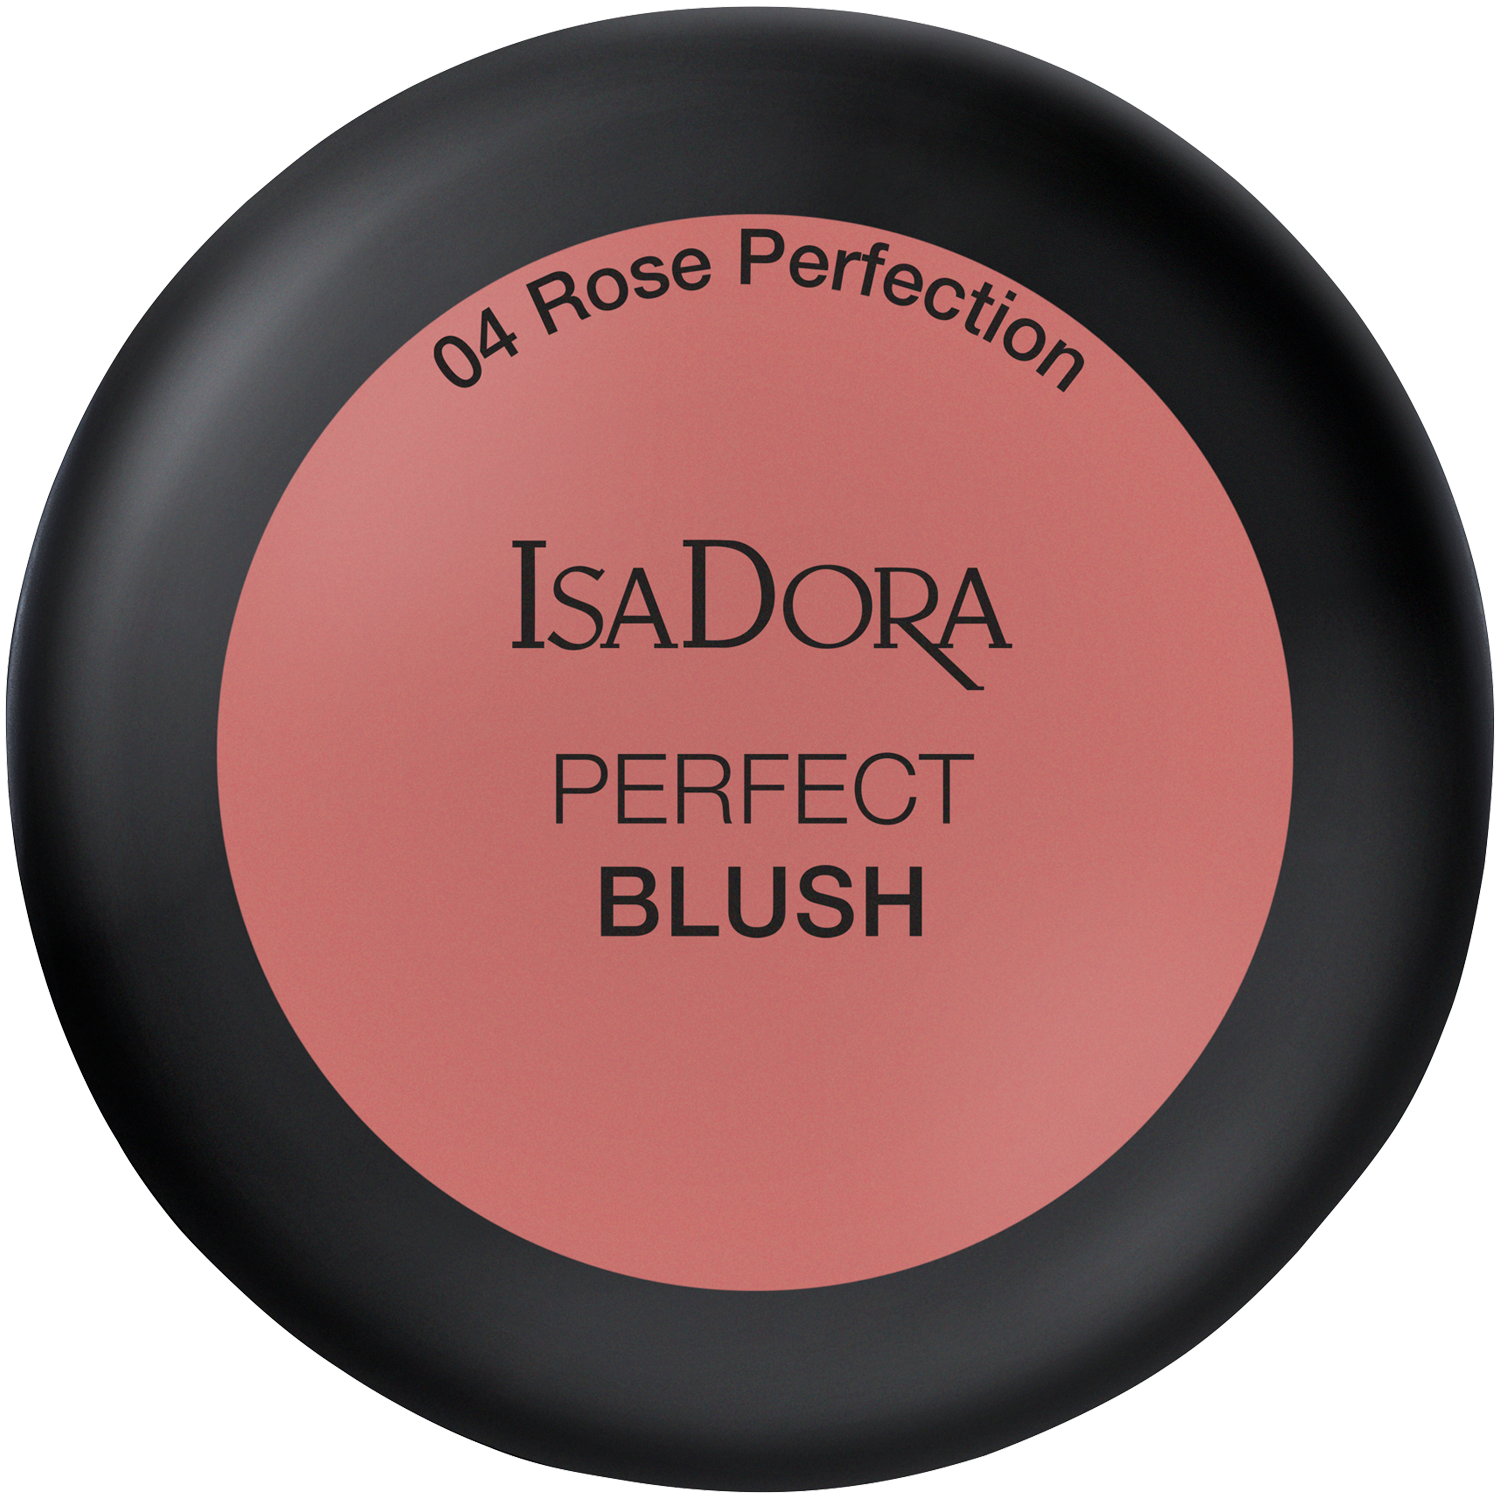 Румяна 04 rose perfection Isadora Perfect Blush, 4,5 гр rose perfection